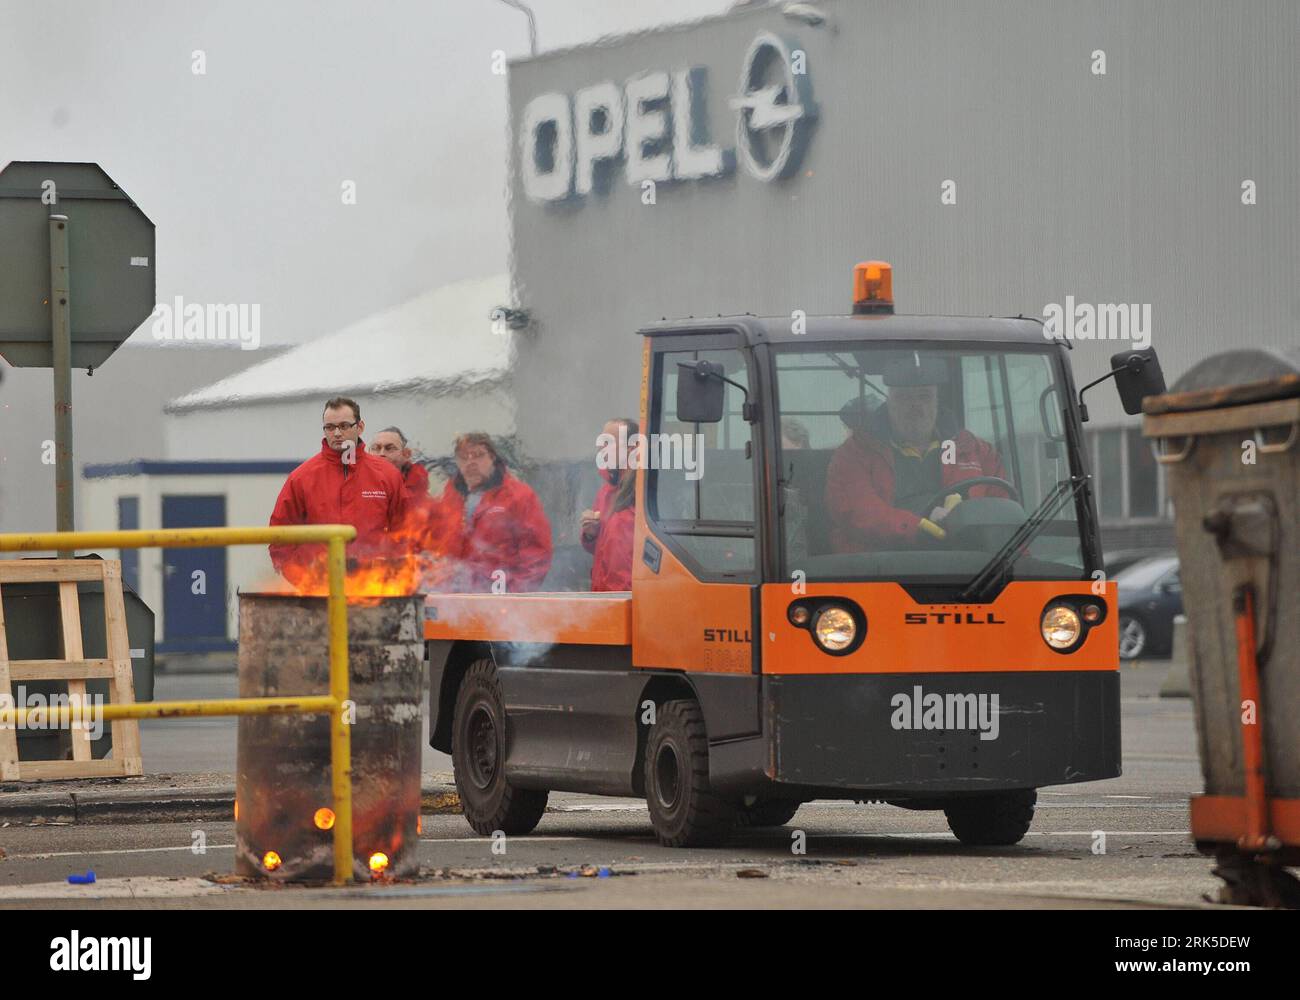 Bildnummer: 53742108  Datum: 21.01.2010  Copyright: imago/Xinhua (100121) -- ANTWERP, Jan. 21, 2010 (Xinhua) -- Auto union members place fire tanks to block the entrance to the Opel assembly plant in Antwerp, Belgium. General Motors (GM) plans to close the Opel assembly plant in Antwerp, with about 2,300 jobs feared to be lost. (Xinhua/Wu Wei) (gxr) (3)BELGIUM-ANTWERP-AUTO-OPEL PLANT-CLOSE PUBLICATIONxNOTxINxCHN Arbeitskampf Streik Fabrik Fabrikschliessung Opel Belgien premiumd kbdig xsp 2010 quer  o00 Antwerpen    Bildnummer 53742108 Date 21 01 2010 Copyright Imago XINHUA  Antwerp Jan 21 2010 Stock Photo